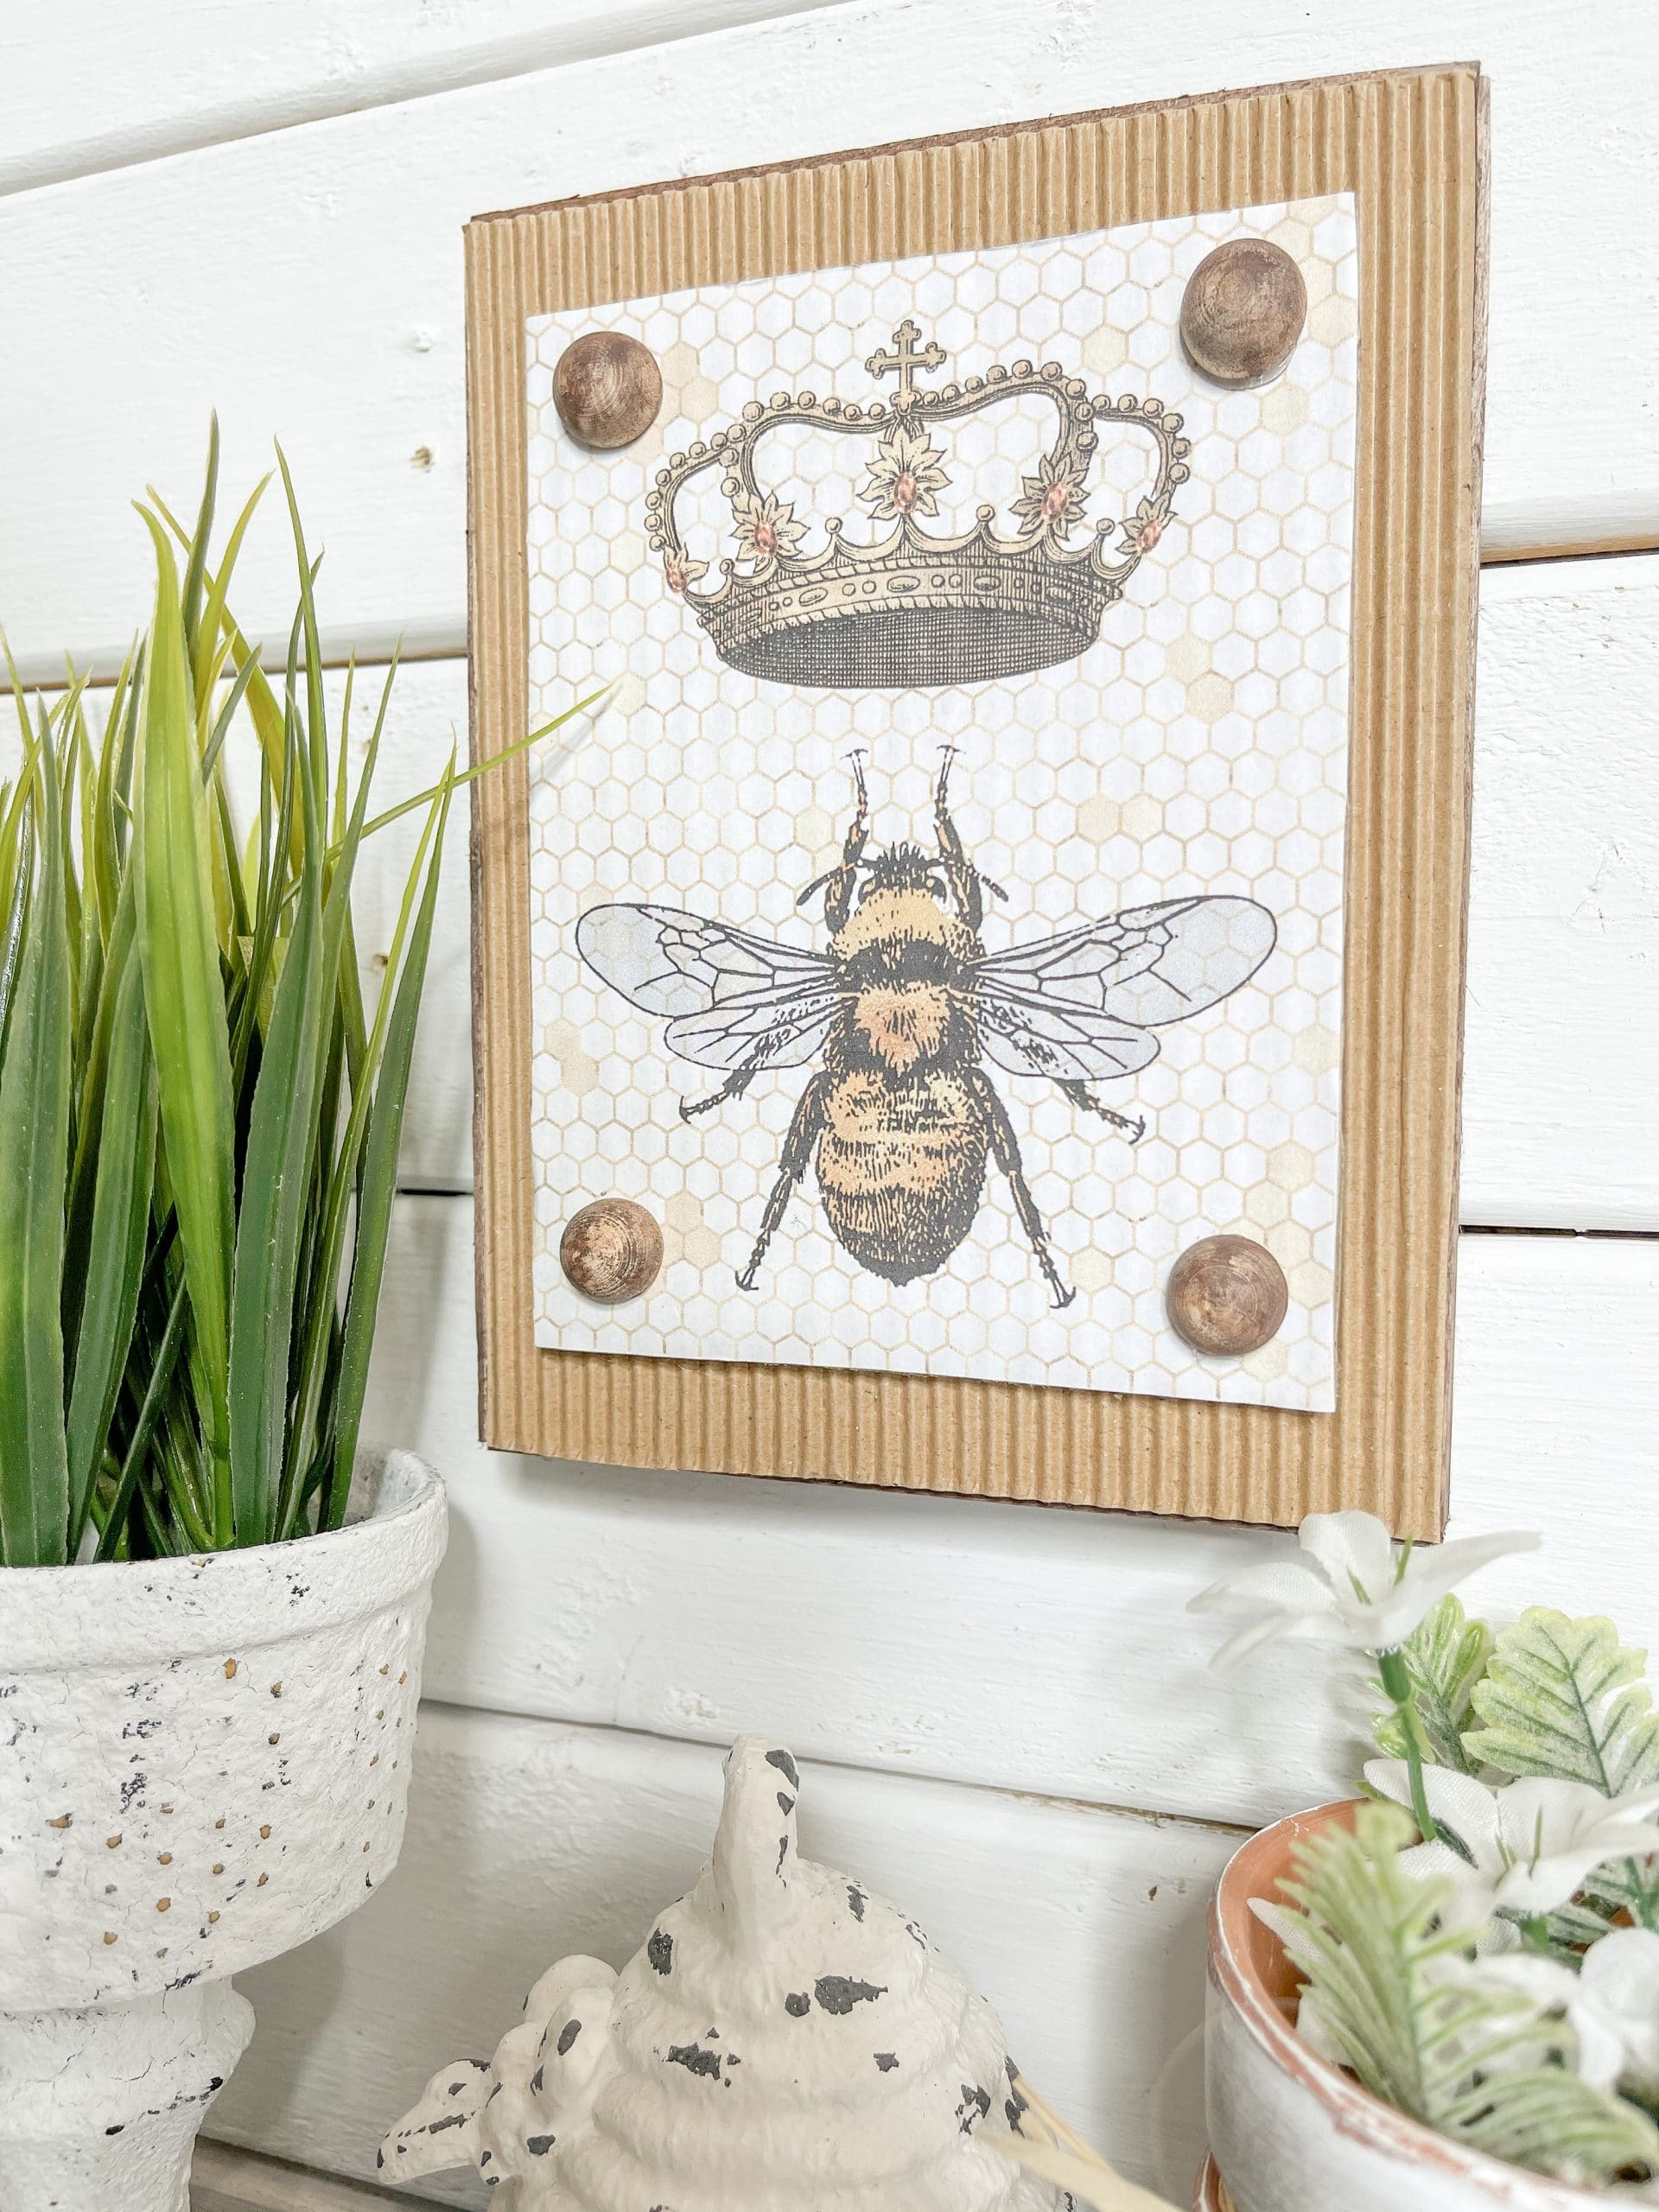 DIY Home Decor with FREE Vintage Bee Printable